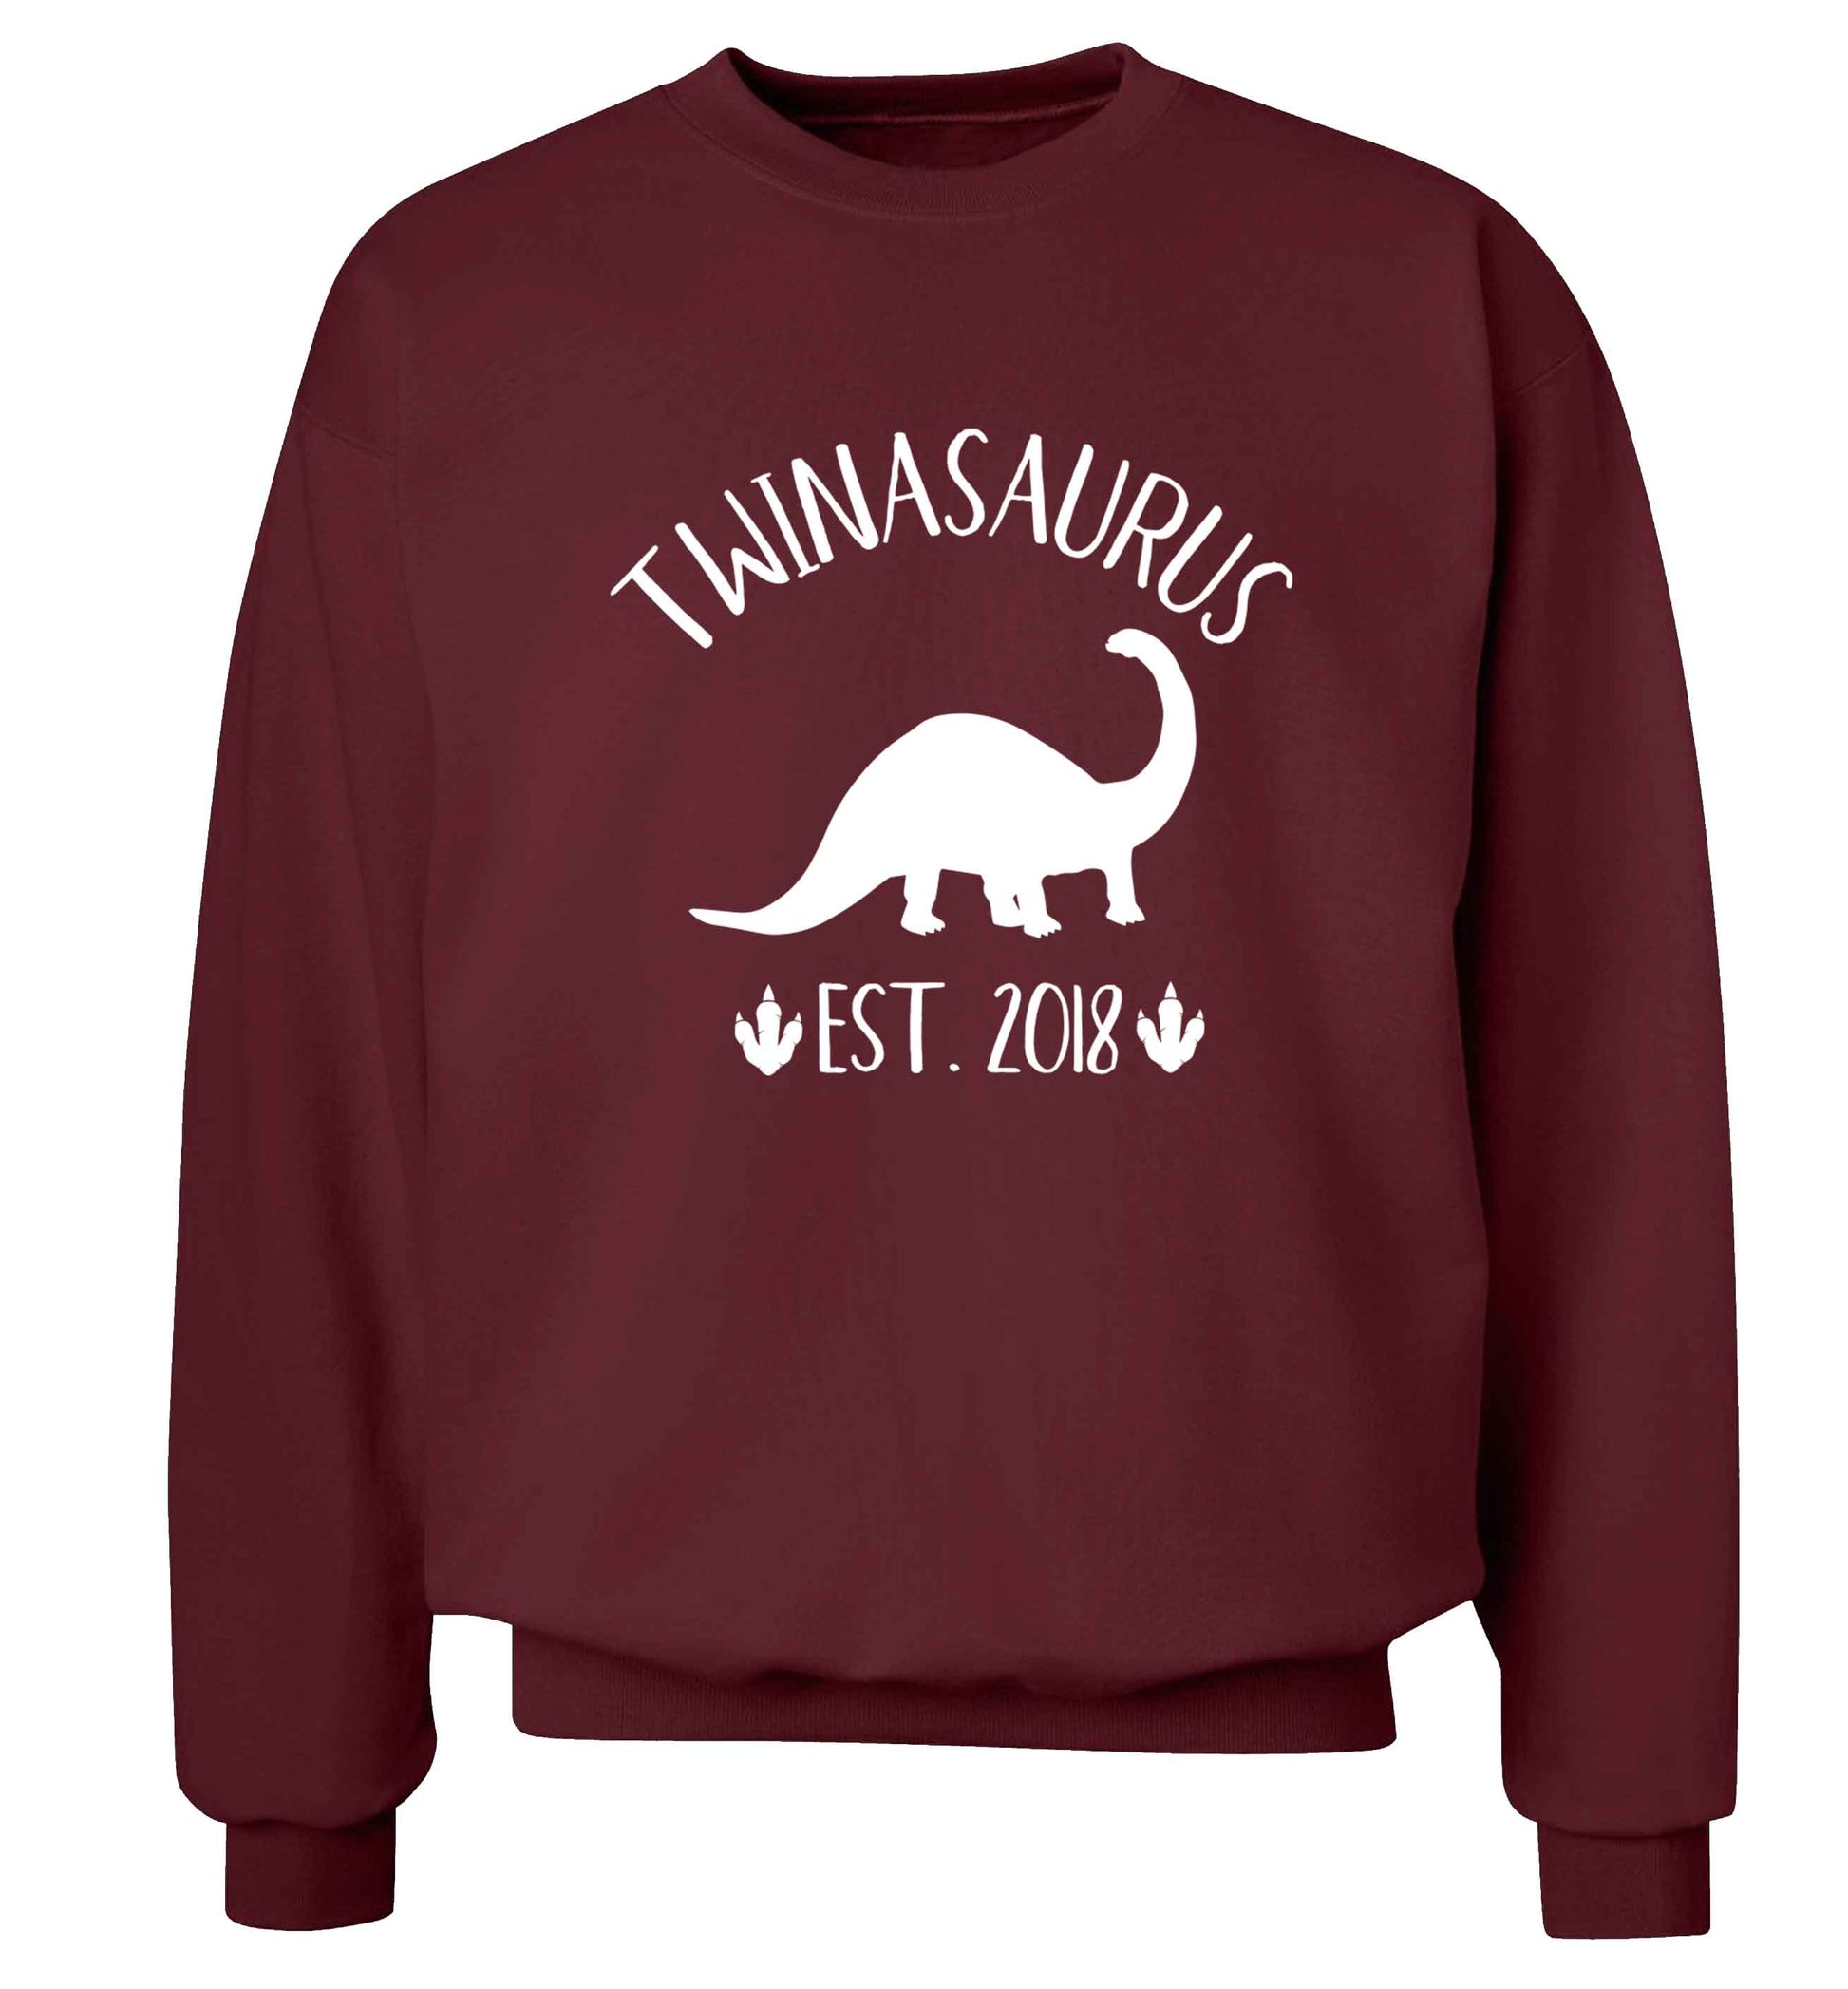 Personalised twinasaurus since (custom date) Adult's unisex maroon Sweater 2XL